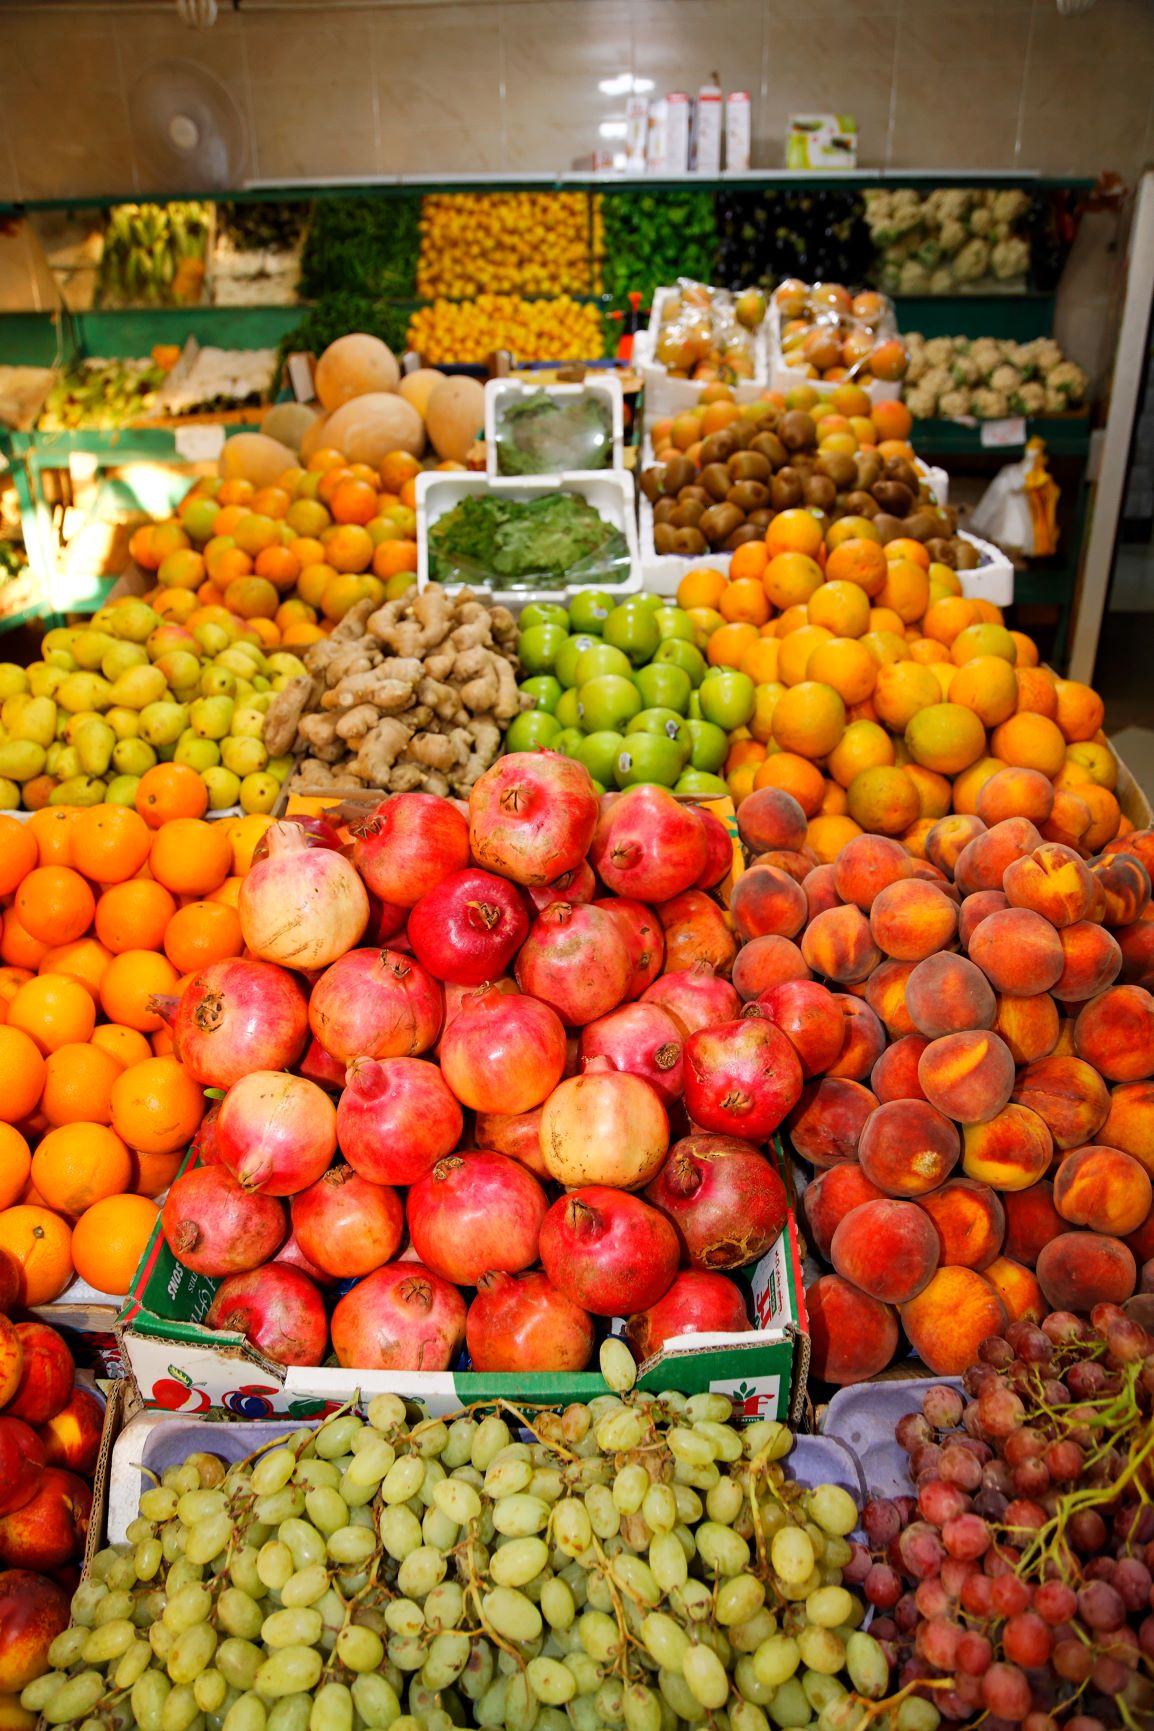 Aqaba Vegetable Market